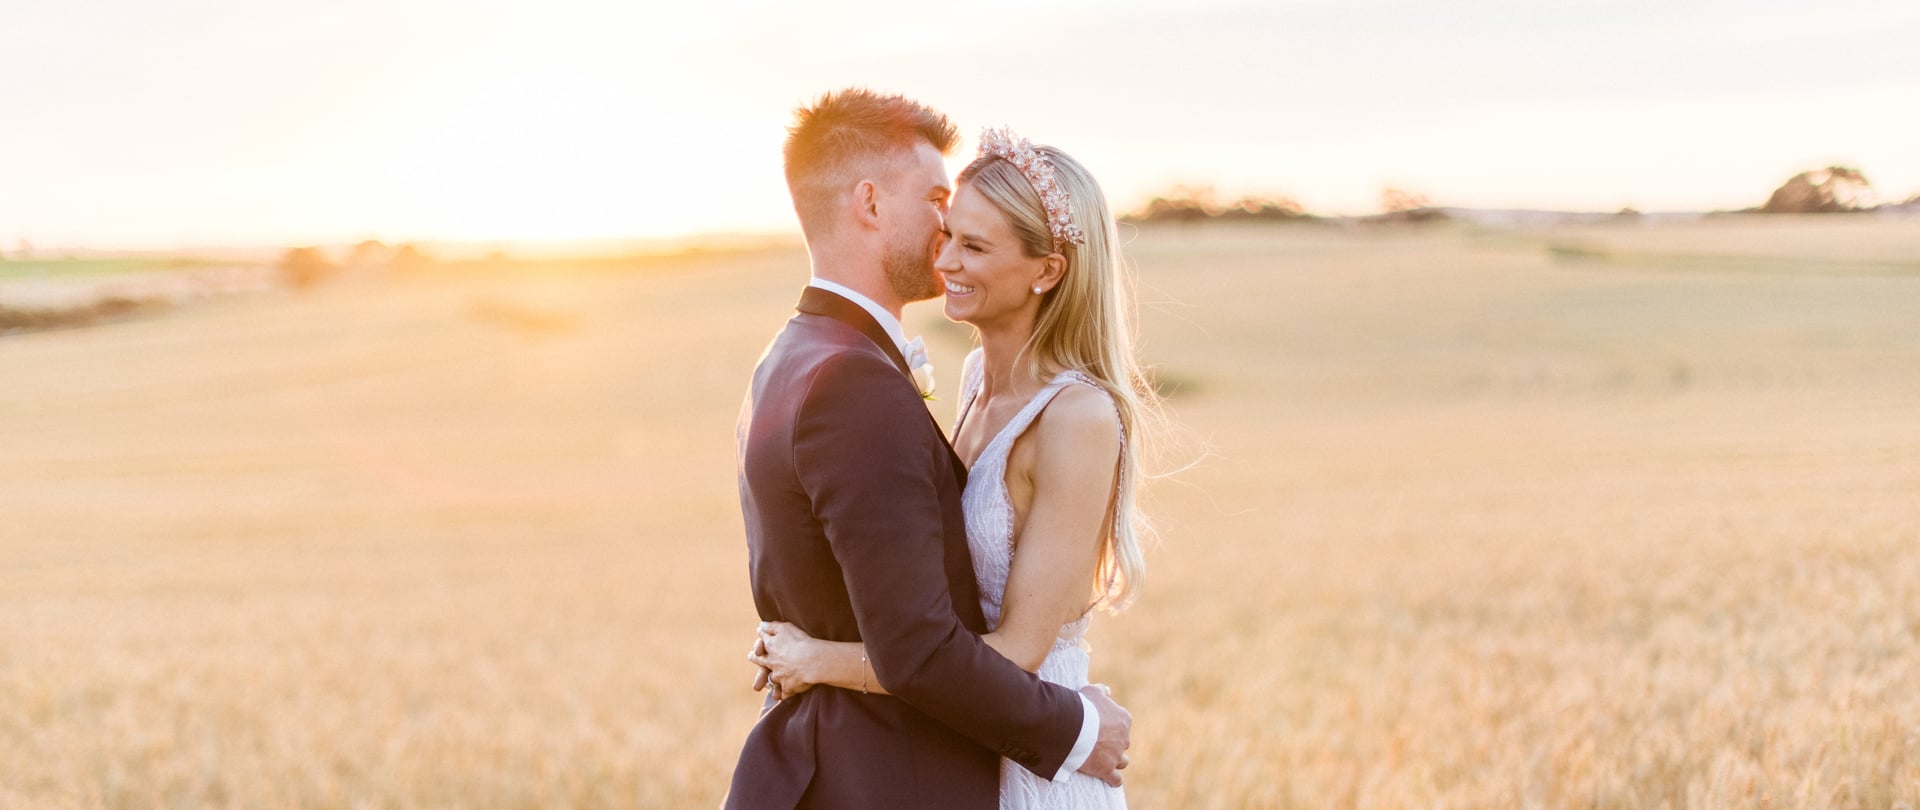 Lauren & Bryce Wedding Video Filmed at Barossa Valley, South Australia